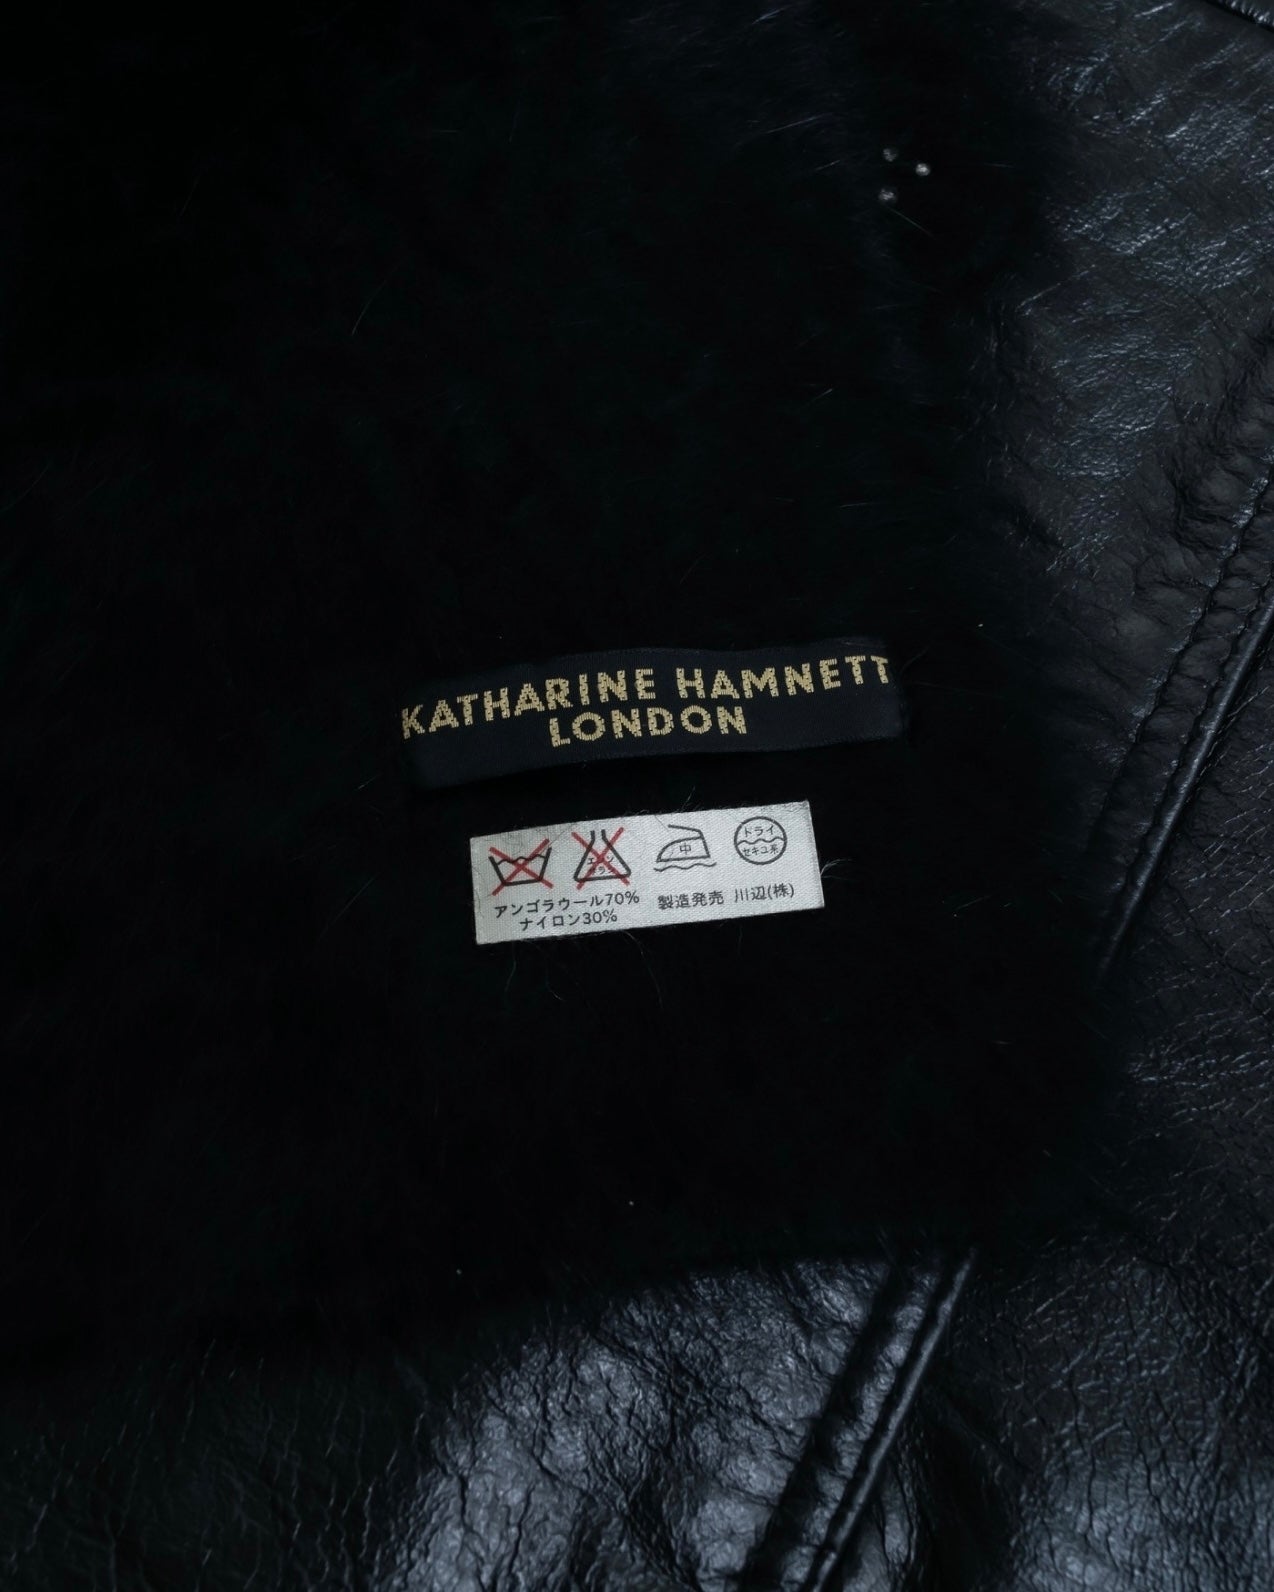 "KATHARINE HAMNETT LONDON" Angora wool shaggy scarf